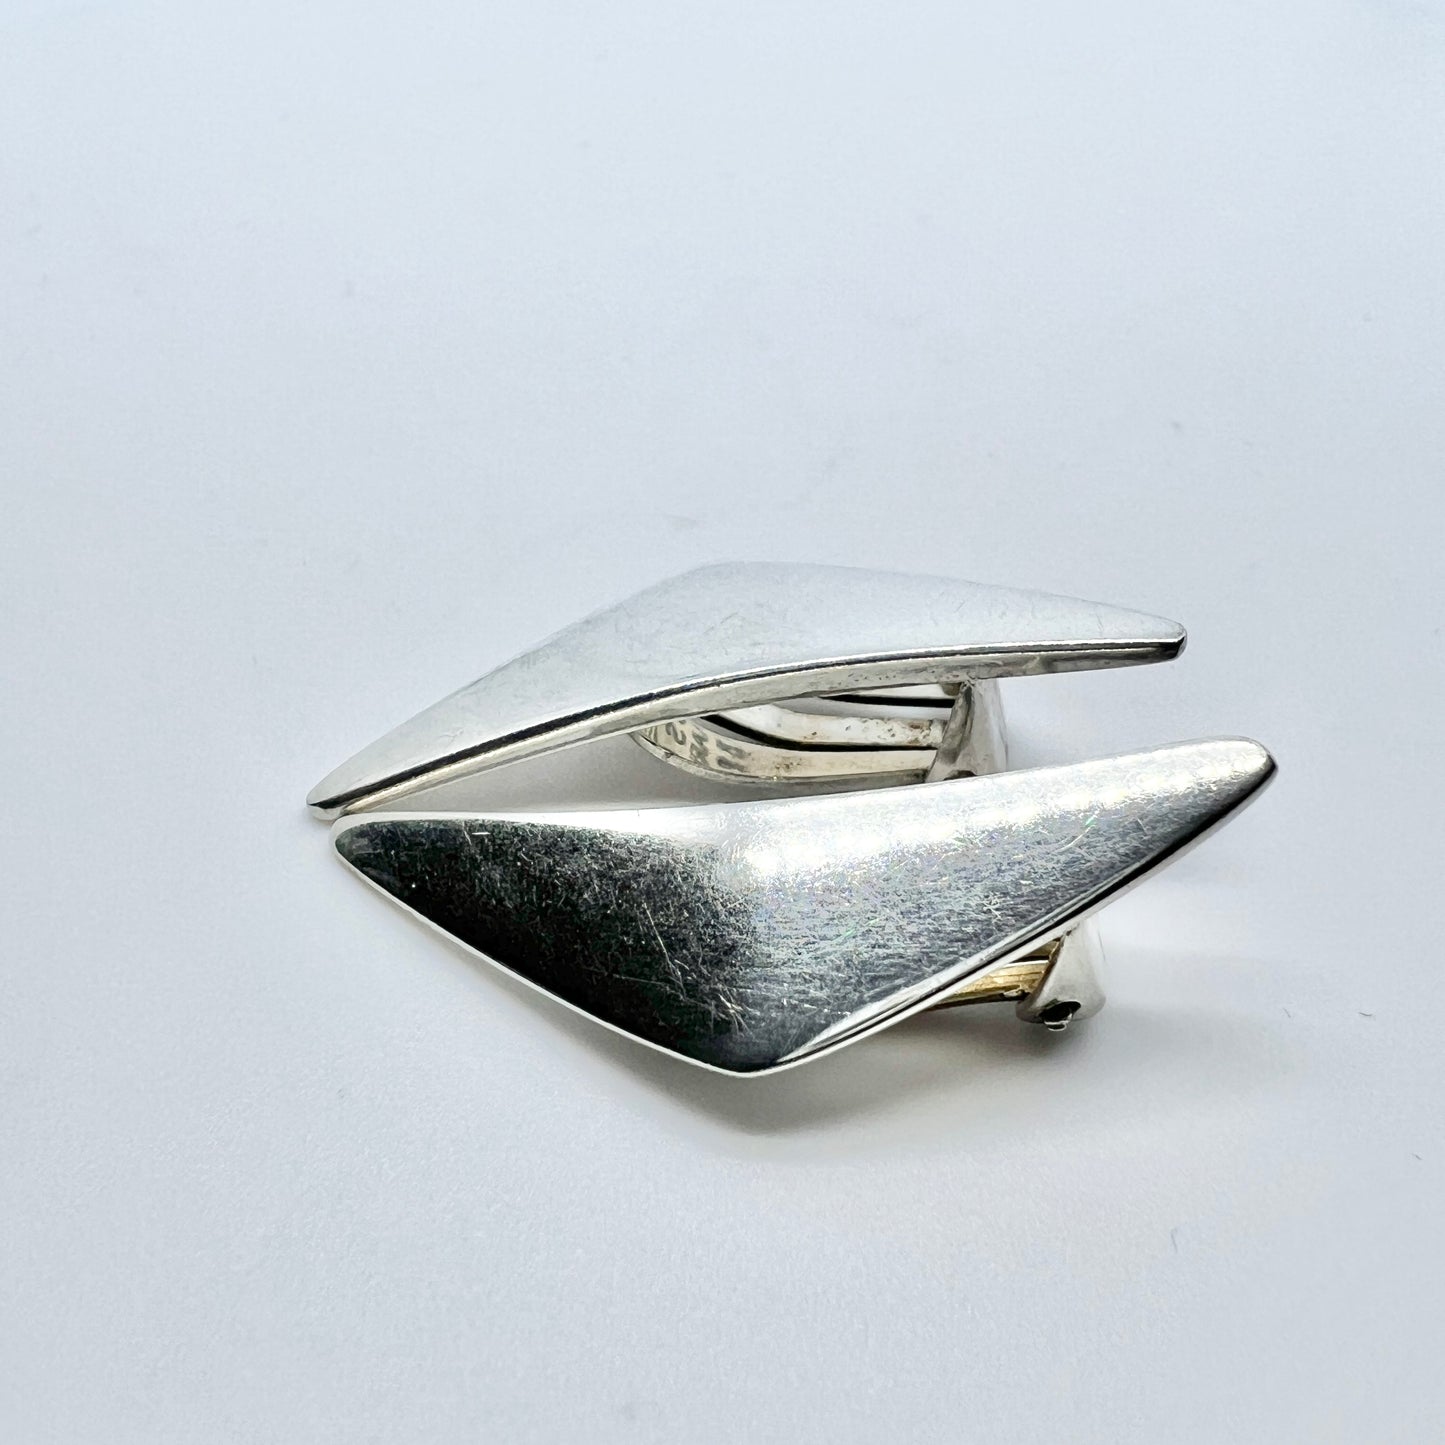 Hans Hansen, design 432 by Bent Gabrielsen, Denmark. Pair of Vintage 1960s Sterling Silver Clip on Earrings.